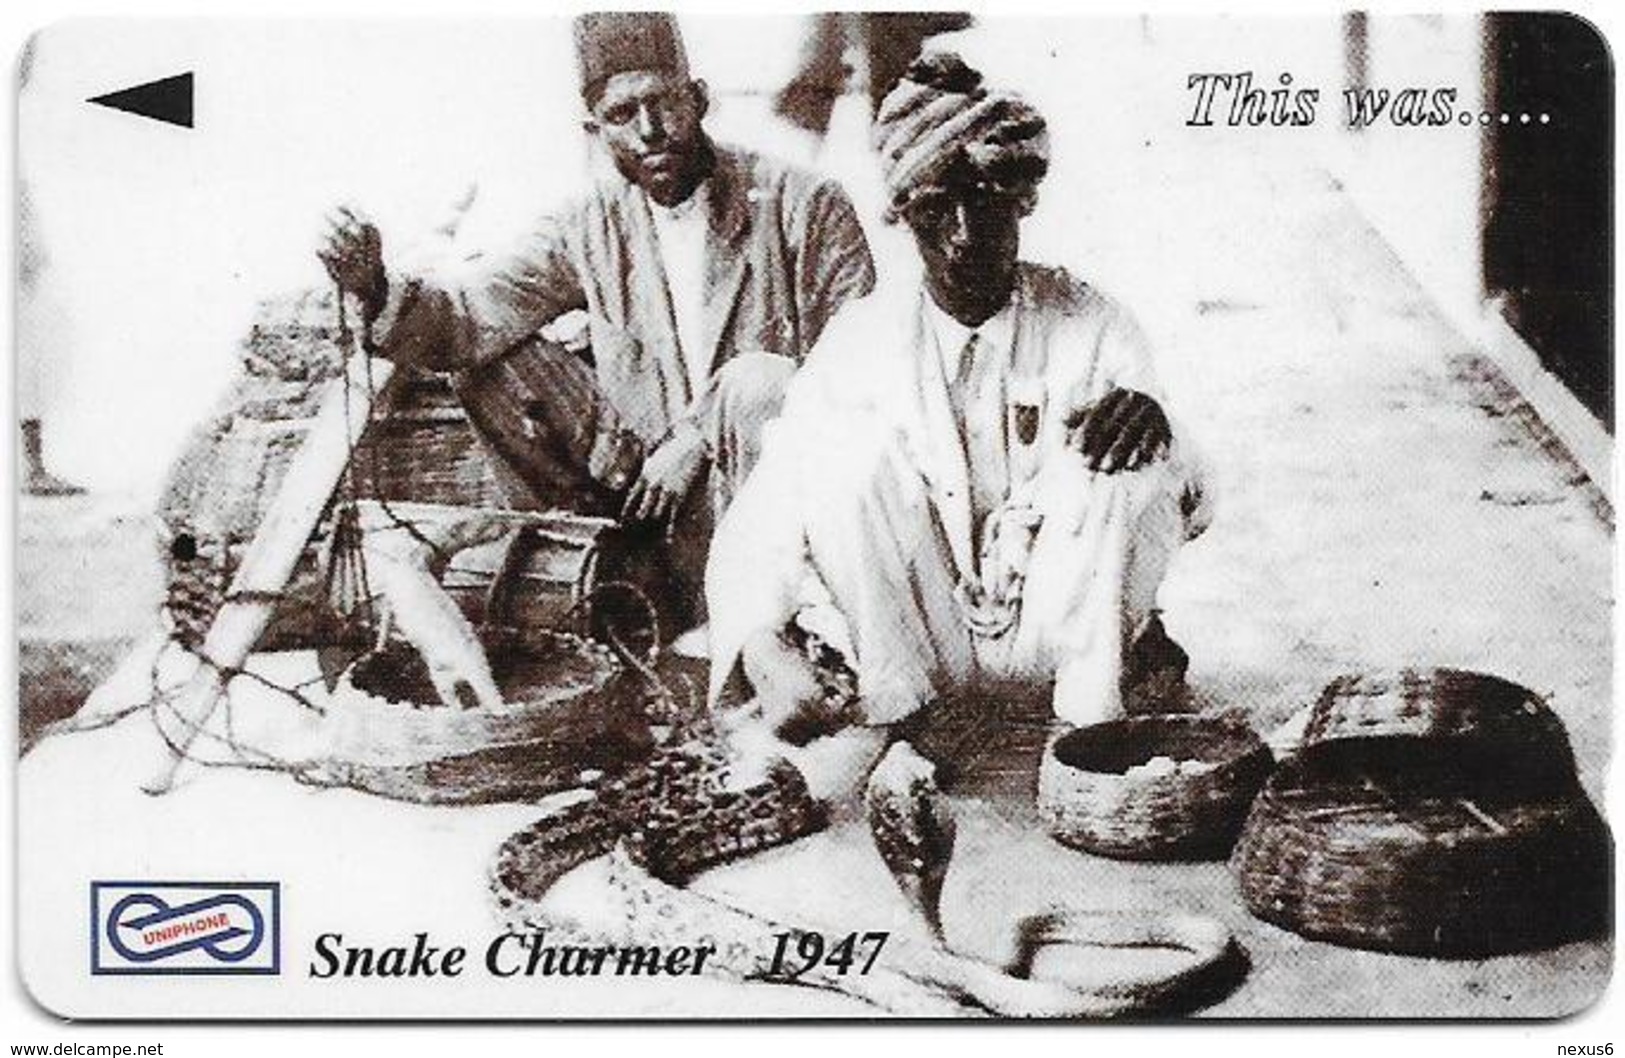 Malaysia (Uniphonekad) - Snake Charmer, This Was.., 35USBB, 1995, Used - Malaysia